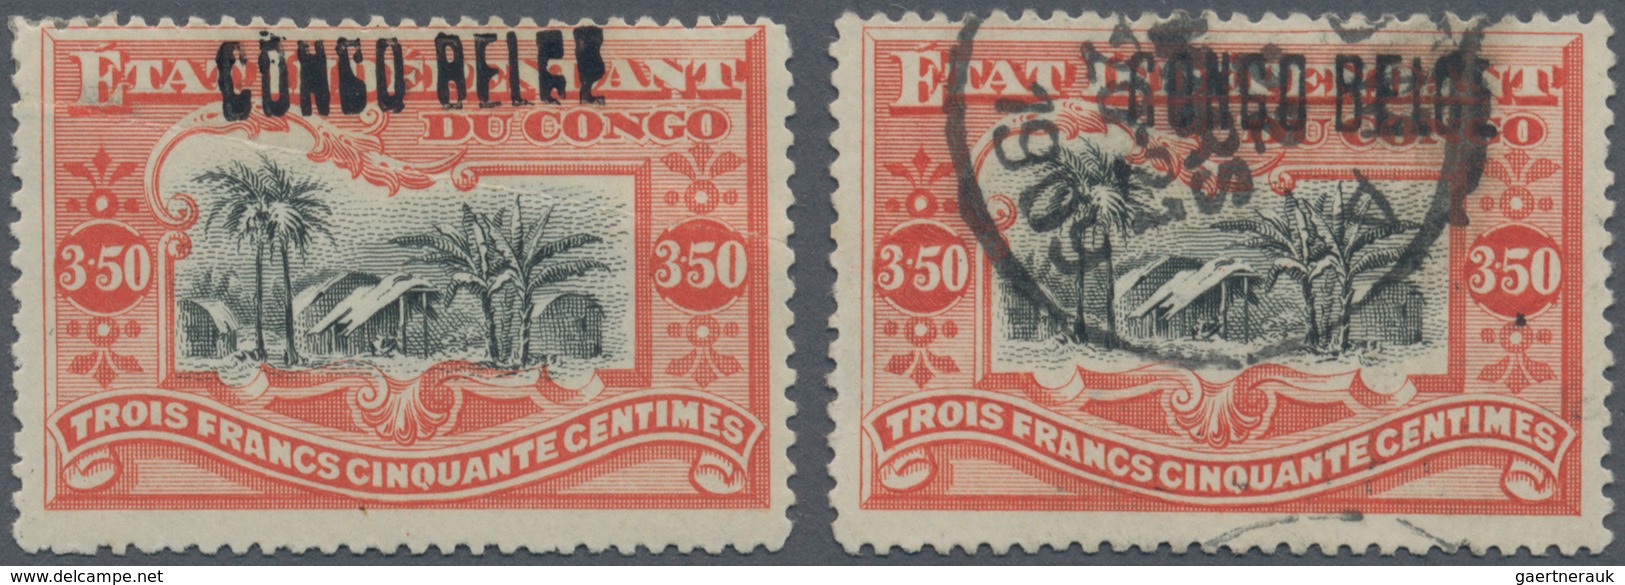 Belgisch-Kongo: 1909 Two Singles Of 3.50fr. Black & Vermilion With LOCAL OVERPRINT, One Mint With Ov - Sammlungen